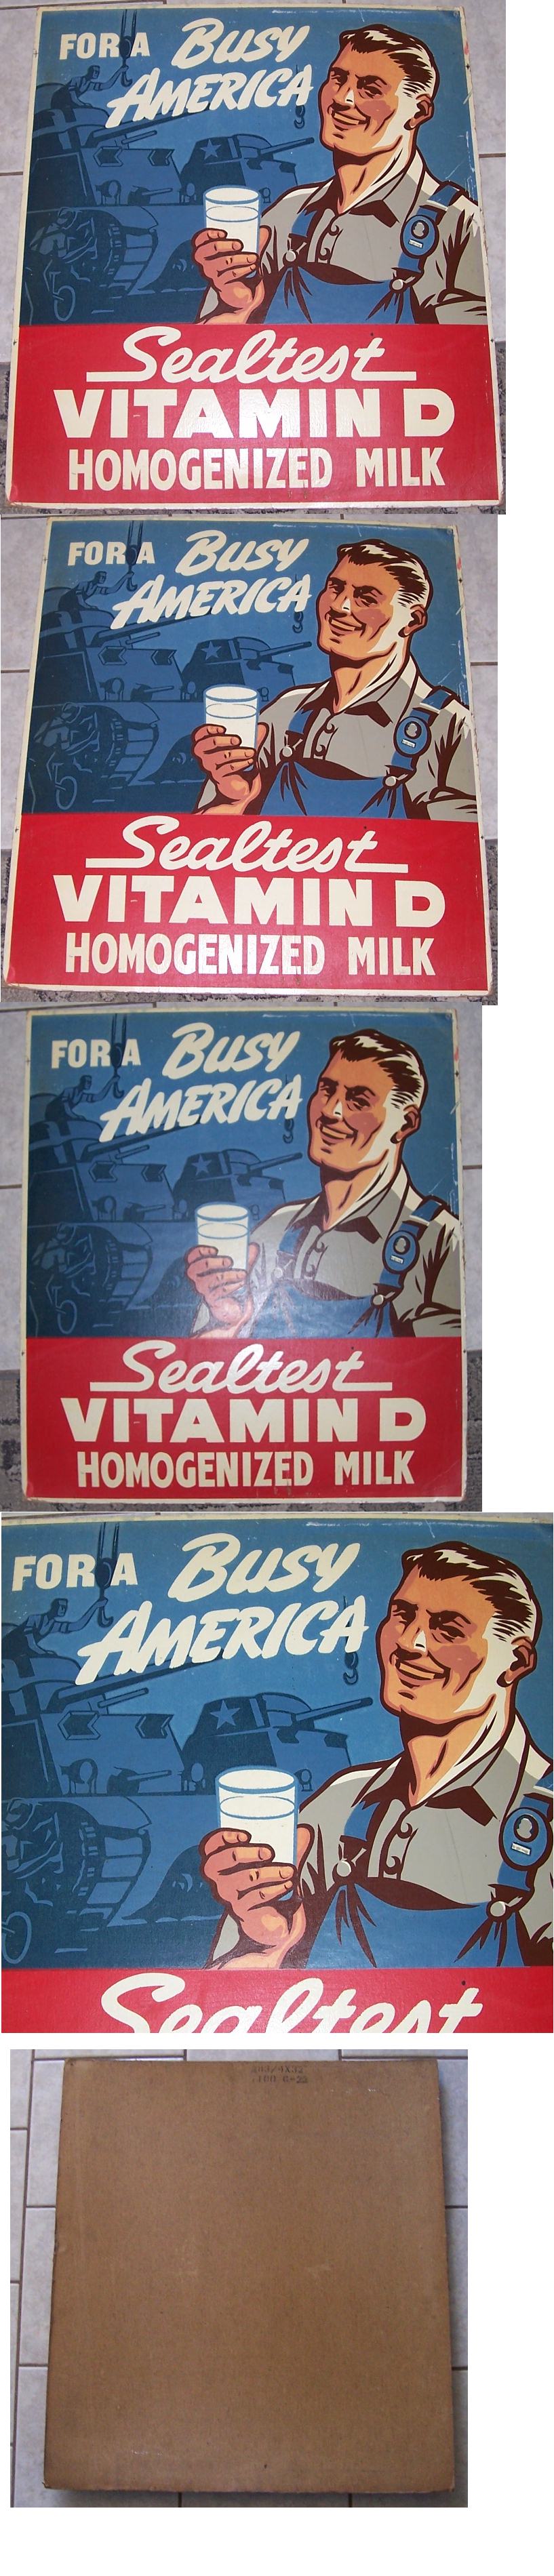 US Propaganda Poster